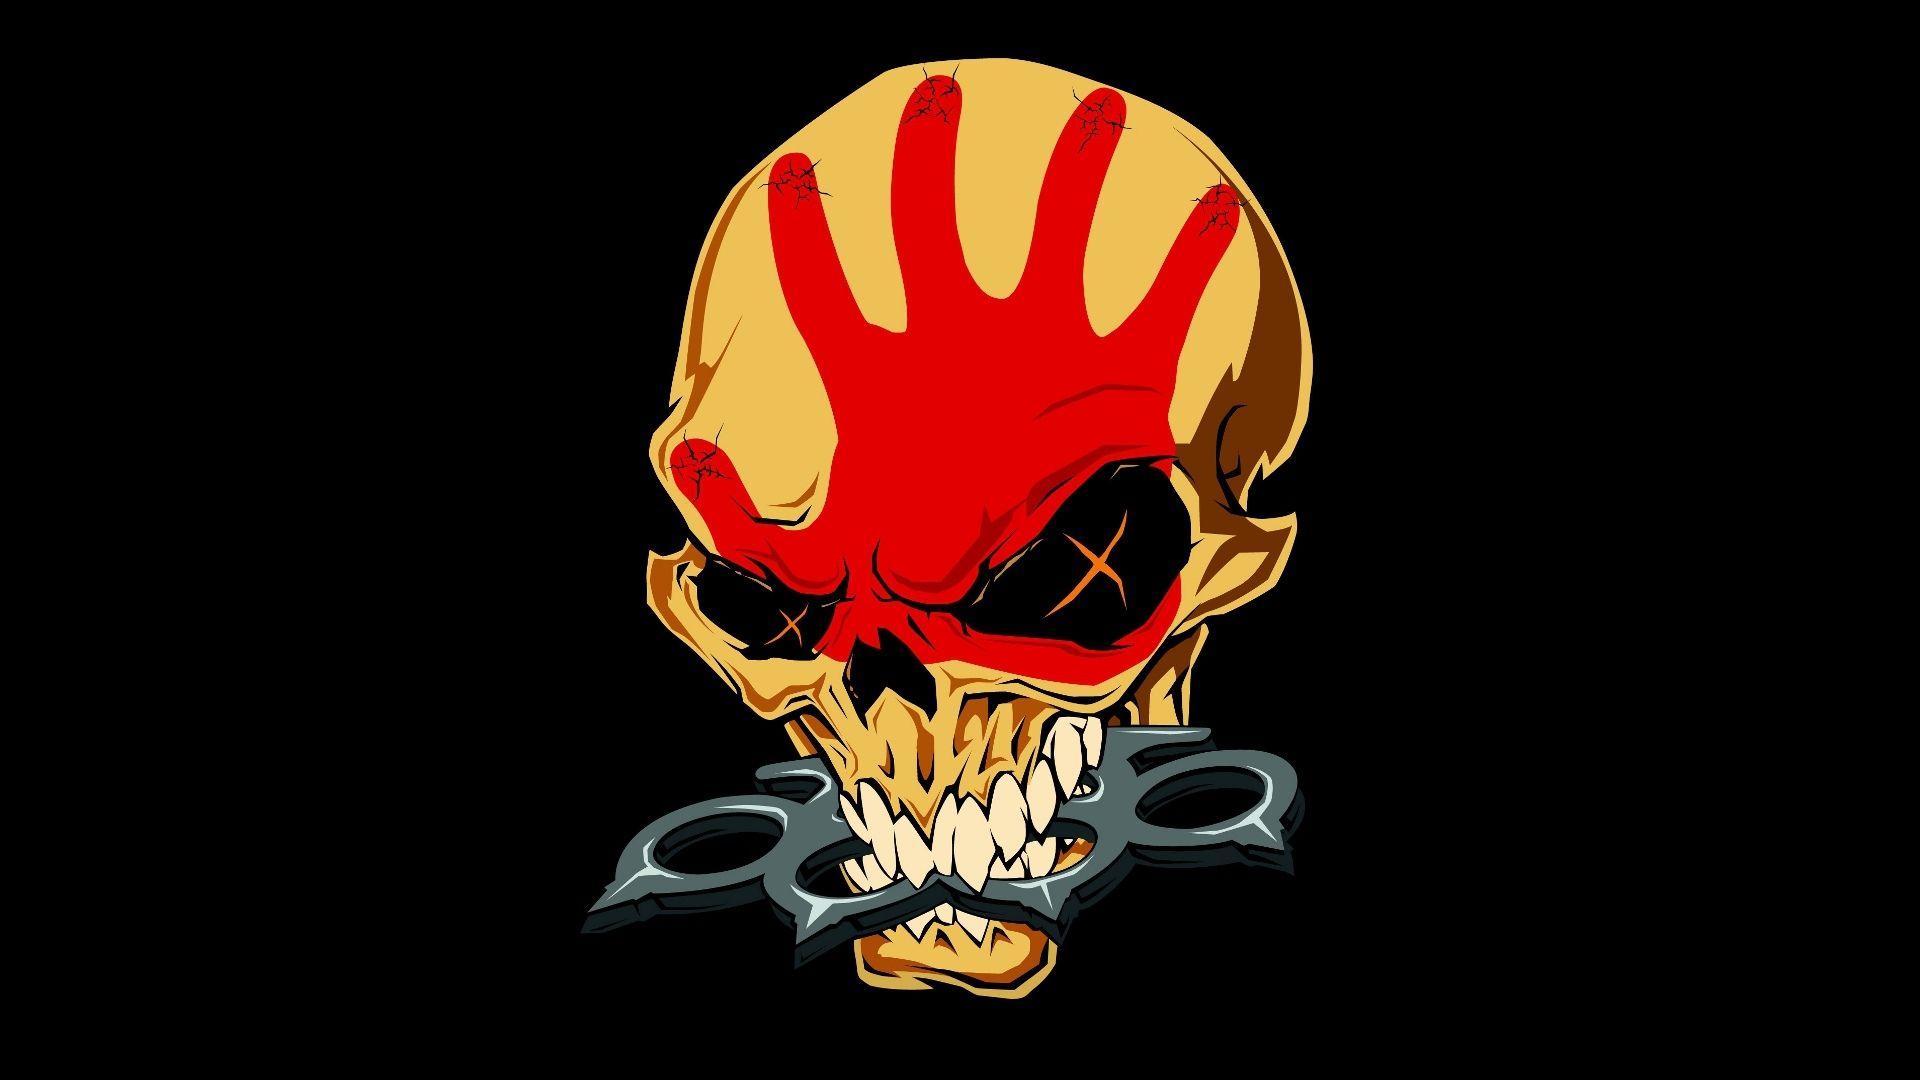 Ffdp Logo - Five Finger Death Punch Wallpapers - Wallpaper Cave